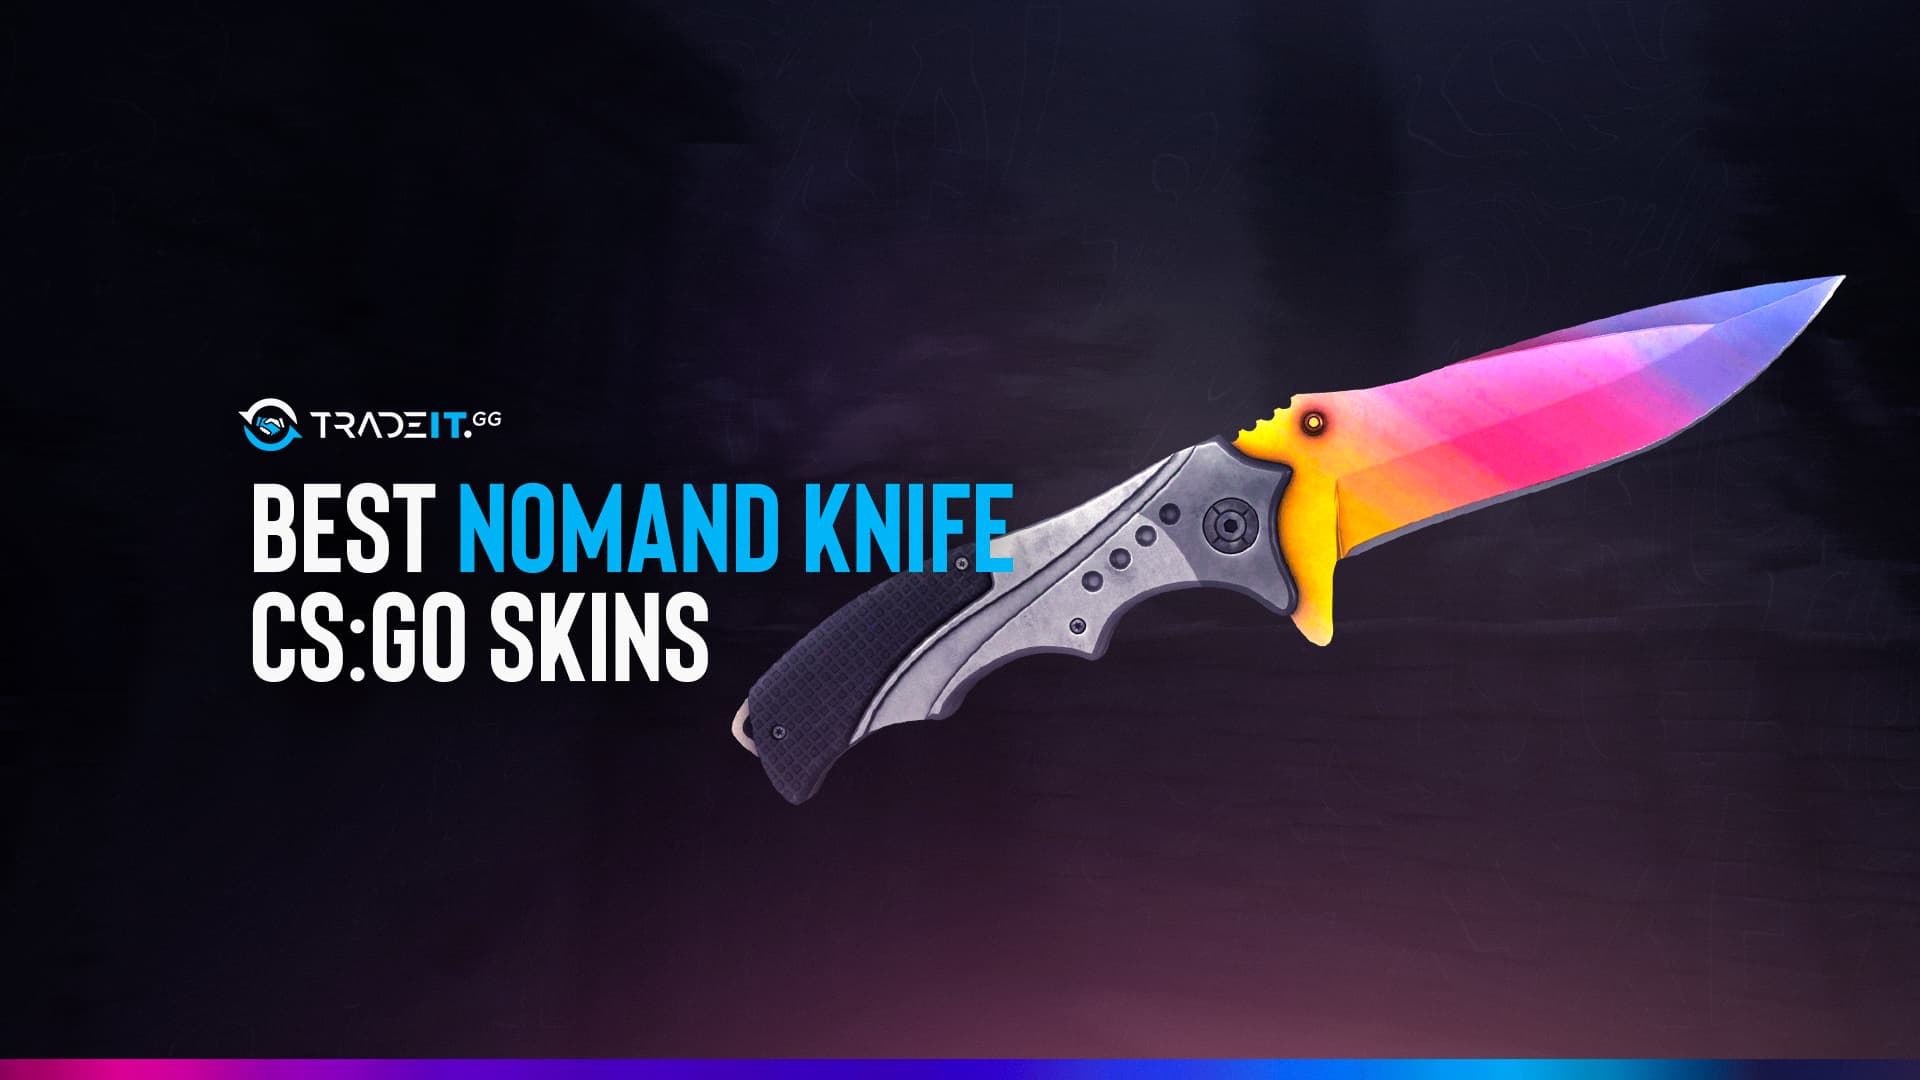 Nomand Knife CS:GO Skins - Top 3 Ones